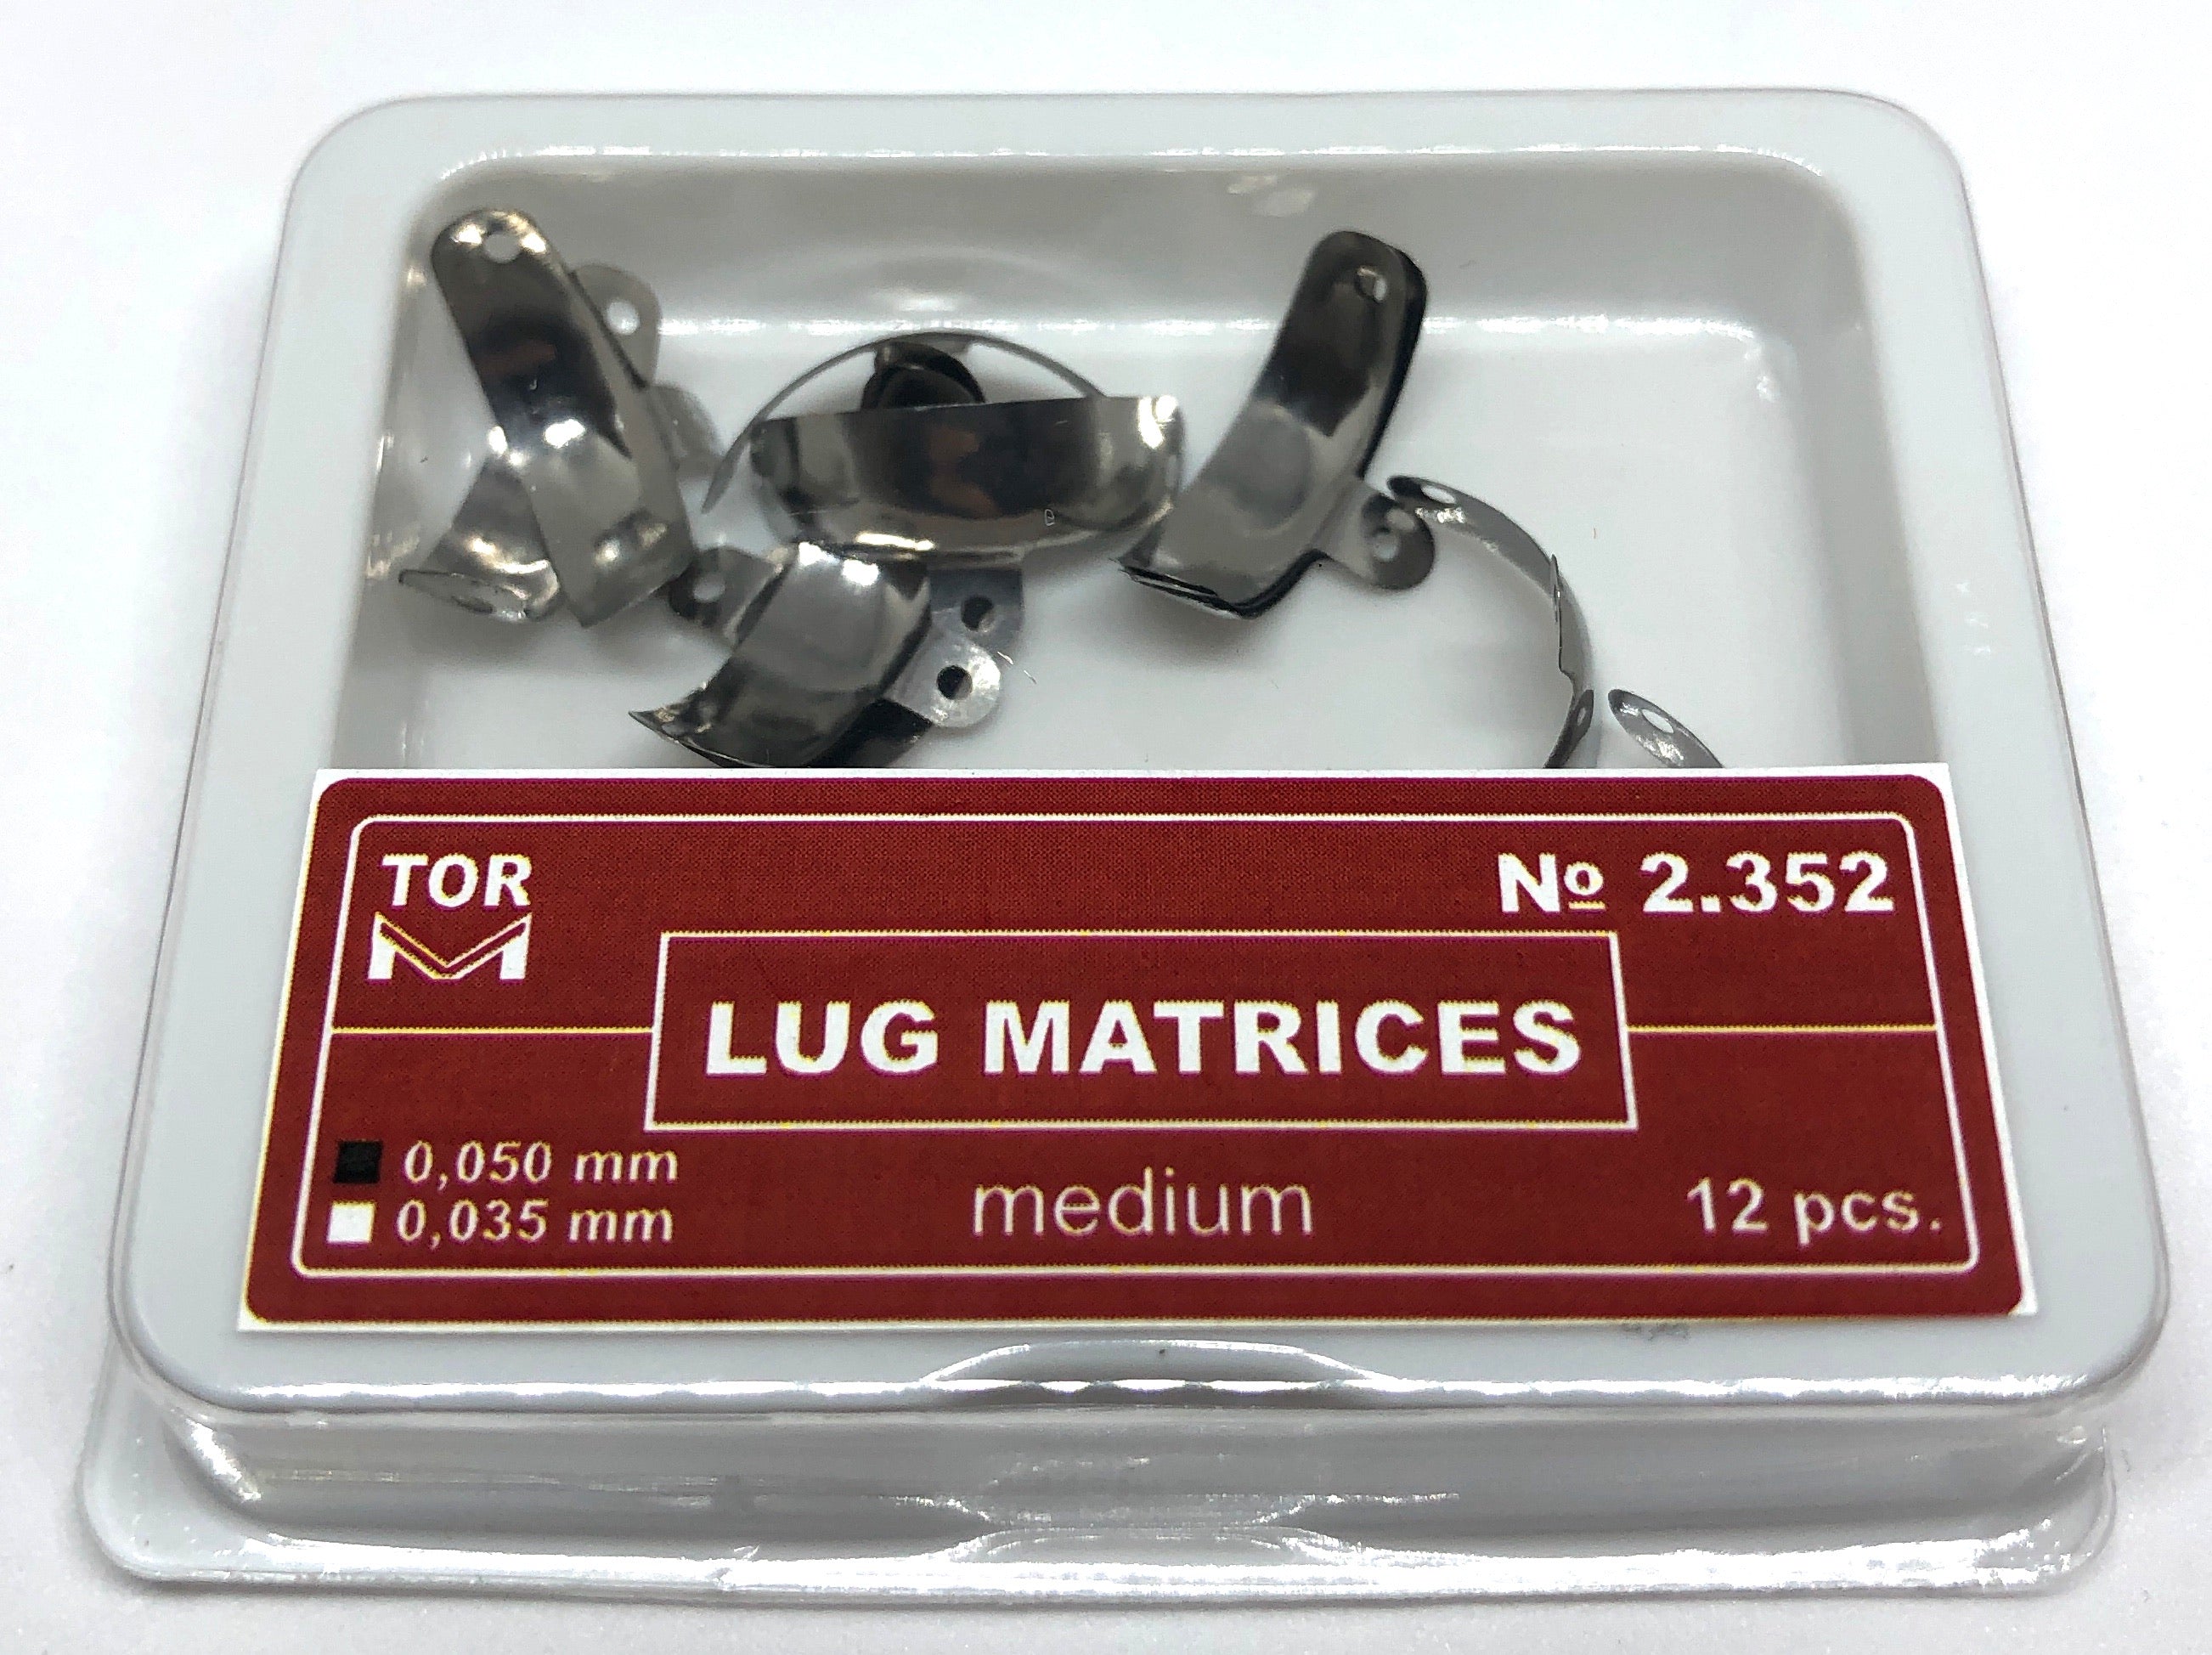 lug-matrices-medium-12-pcs